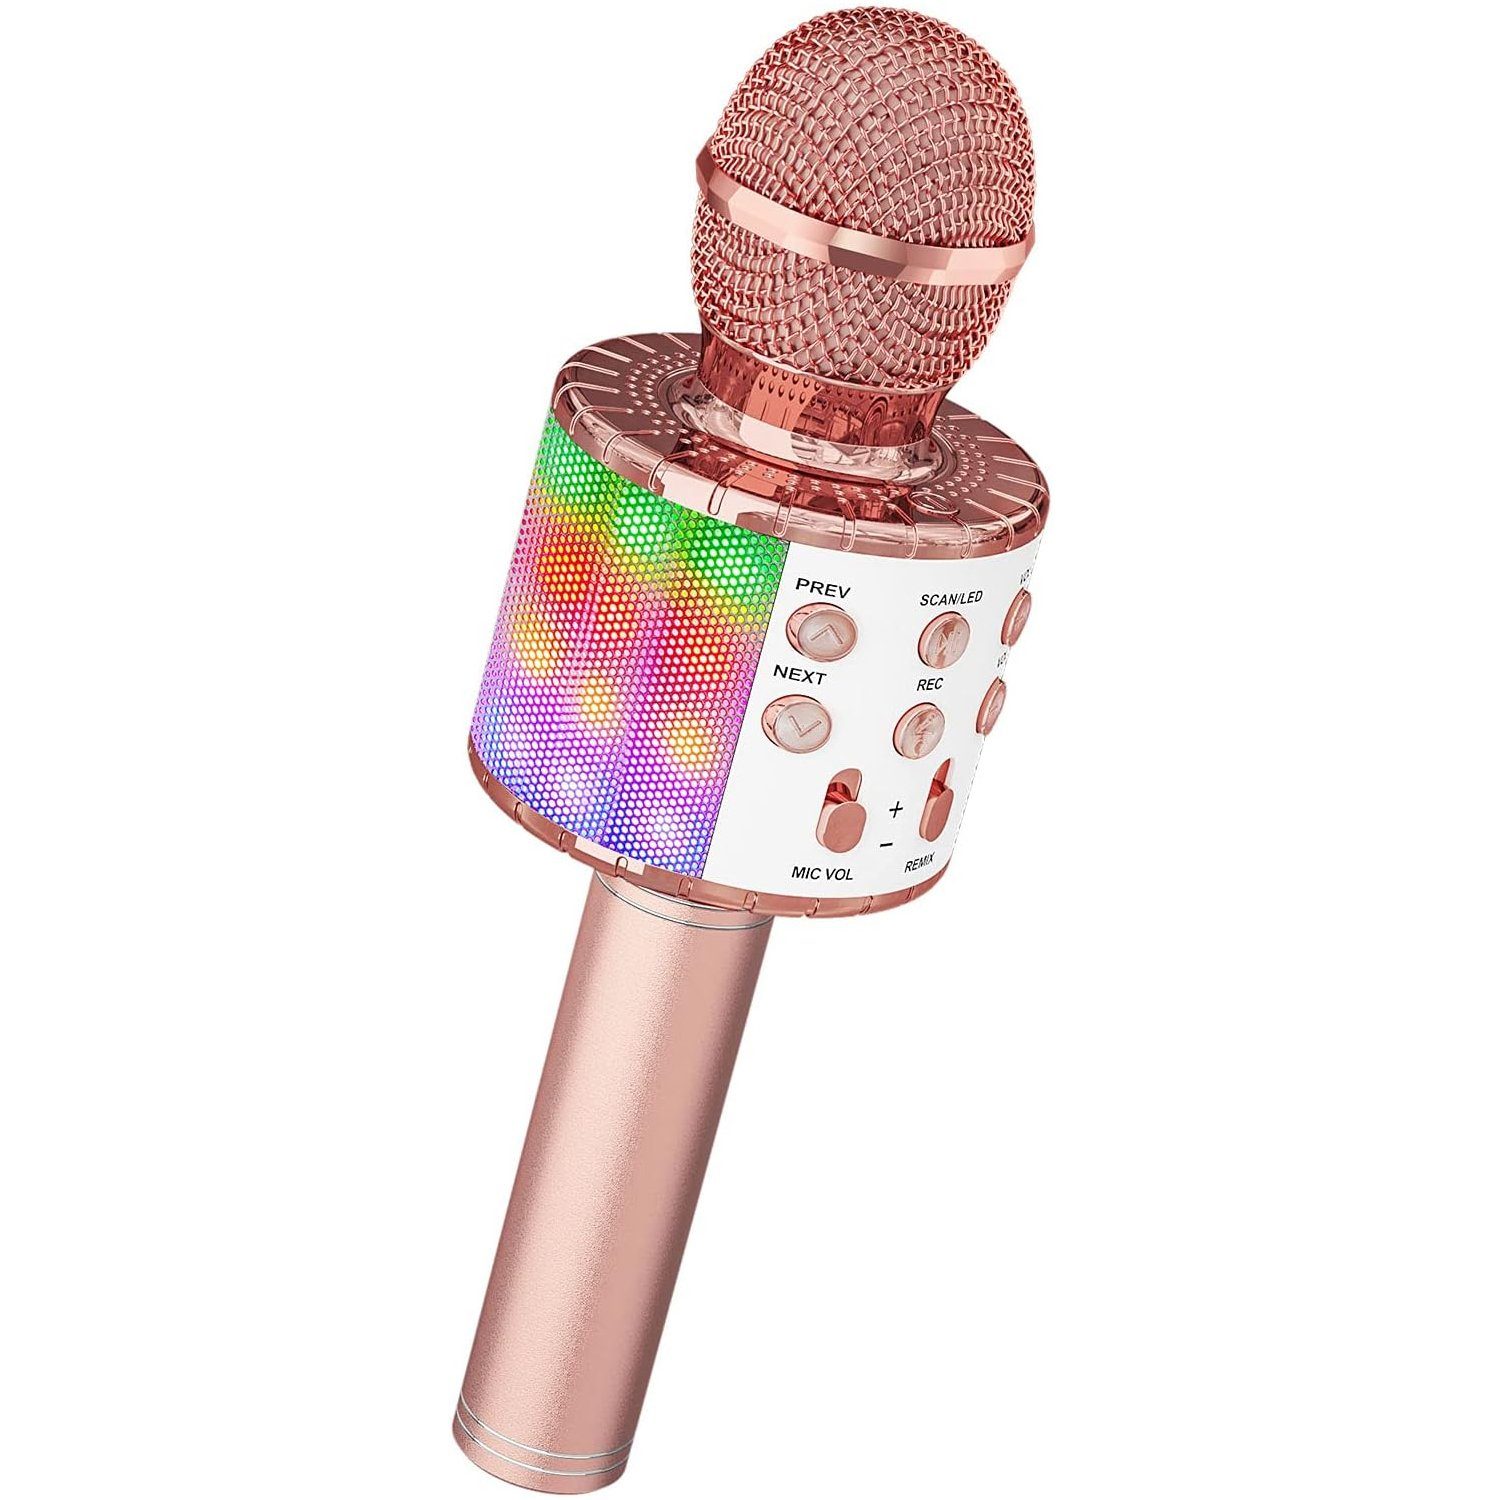 Bluetooth Karaoke Mikrofon,Drahtlose Kinder Microphon Lautsprecher mit  Licht